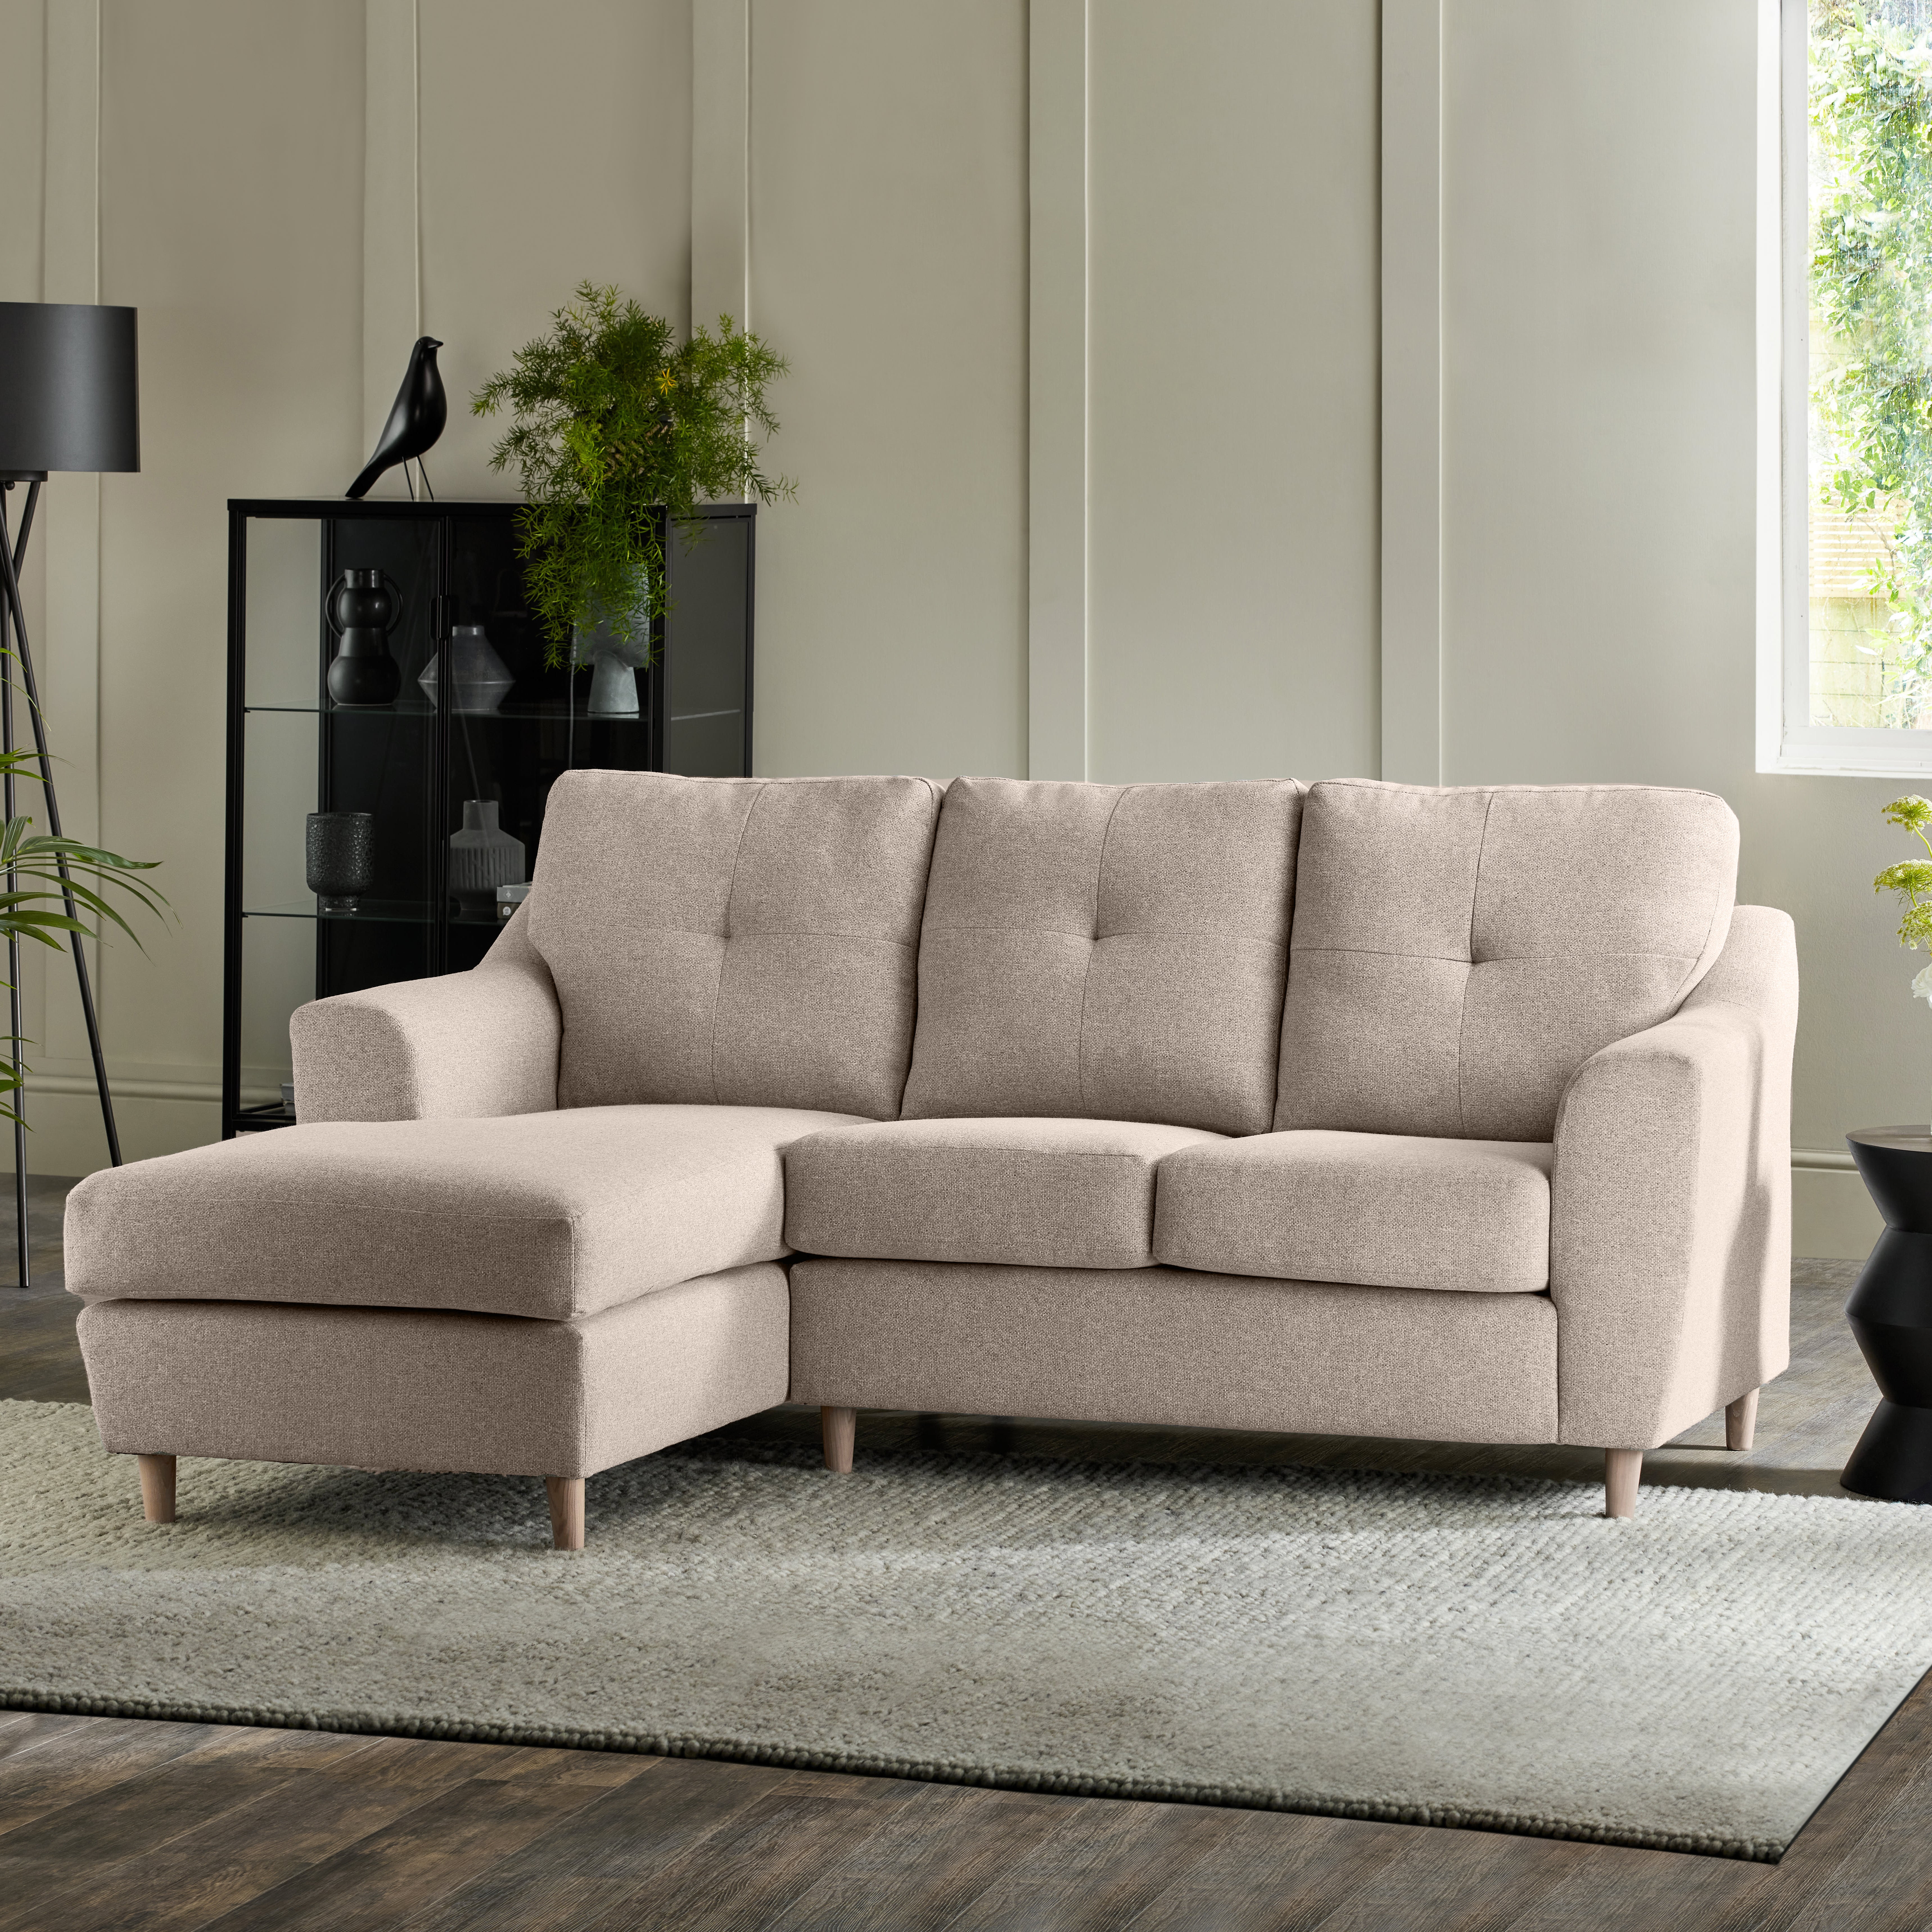 Baxter Textured Weave Corner Chaise Sofa